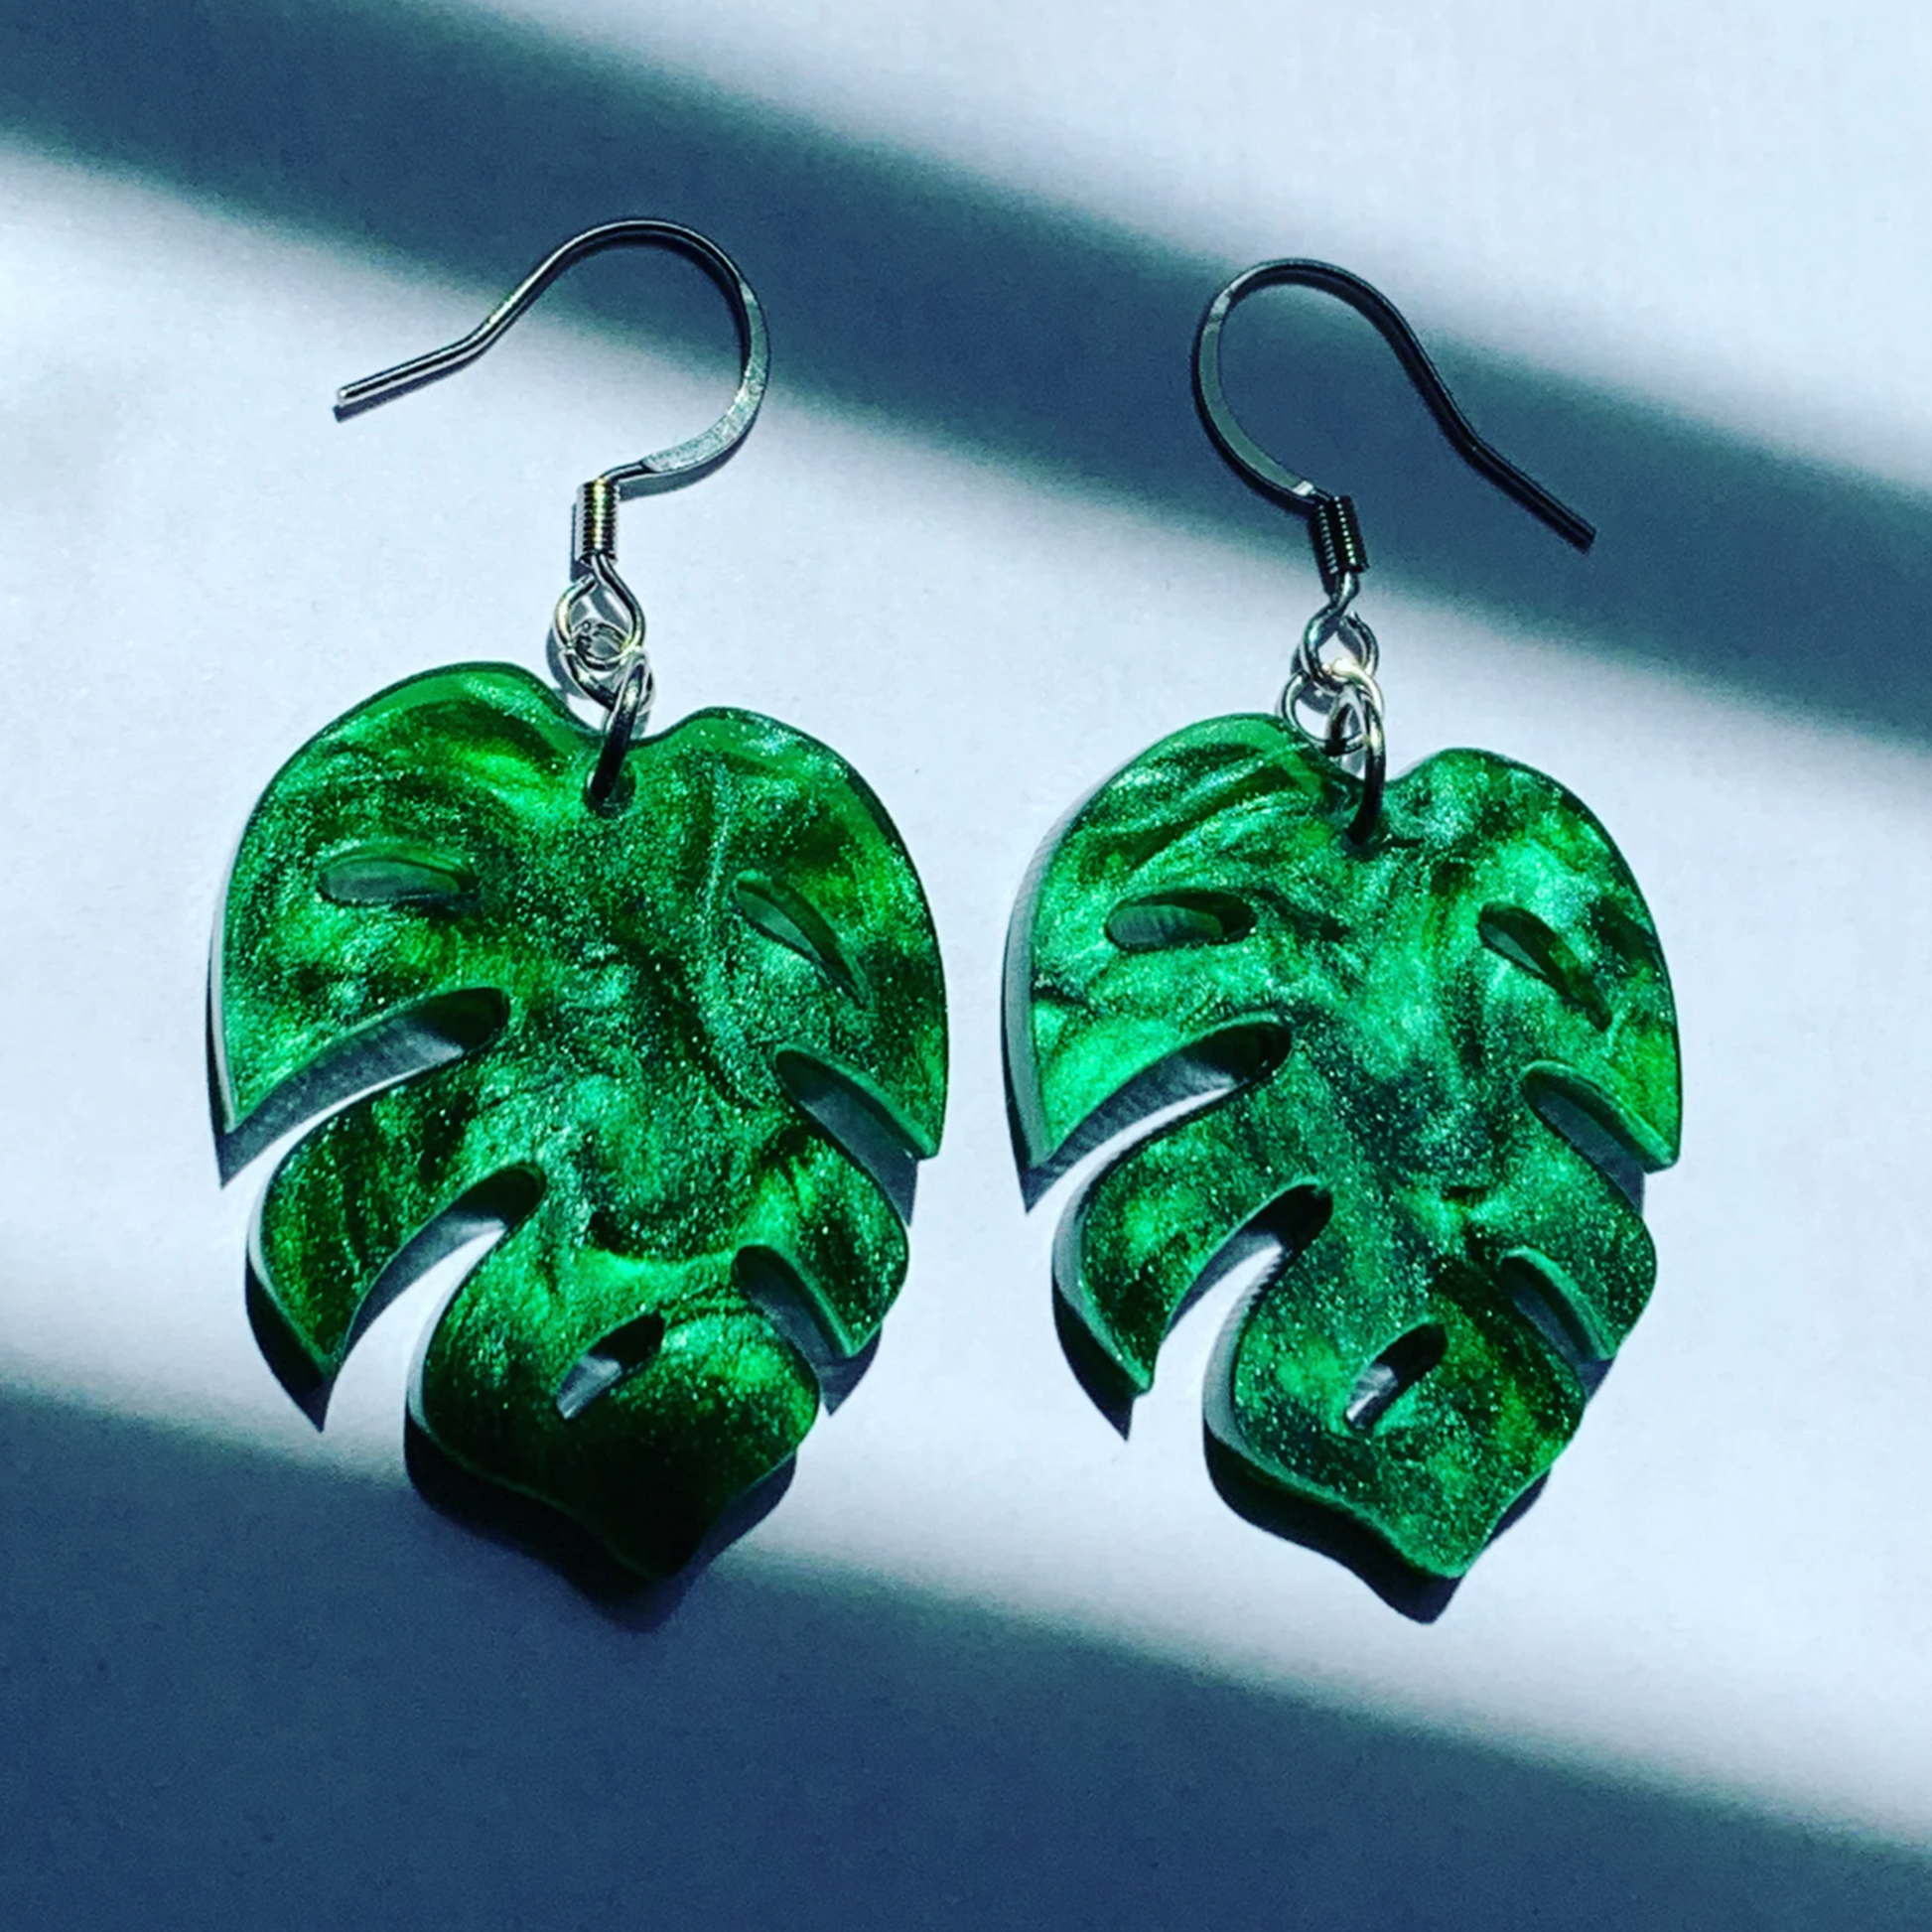 shimmery green acrylic monstera deliciosa 2 inch leaf earrings